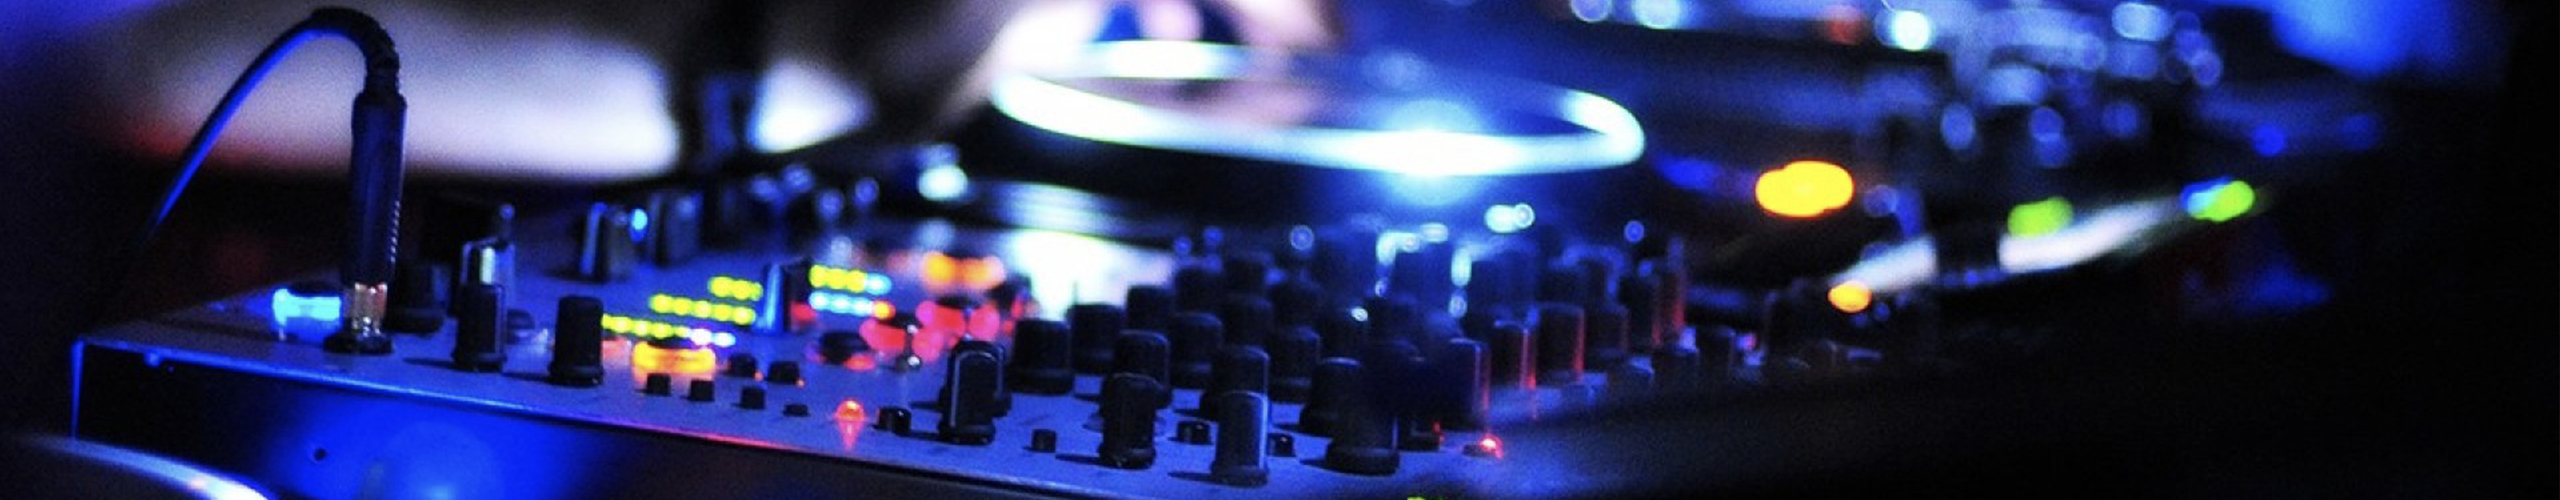 DJ-Equipment.jpg